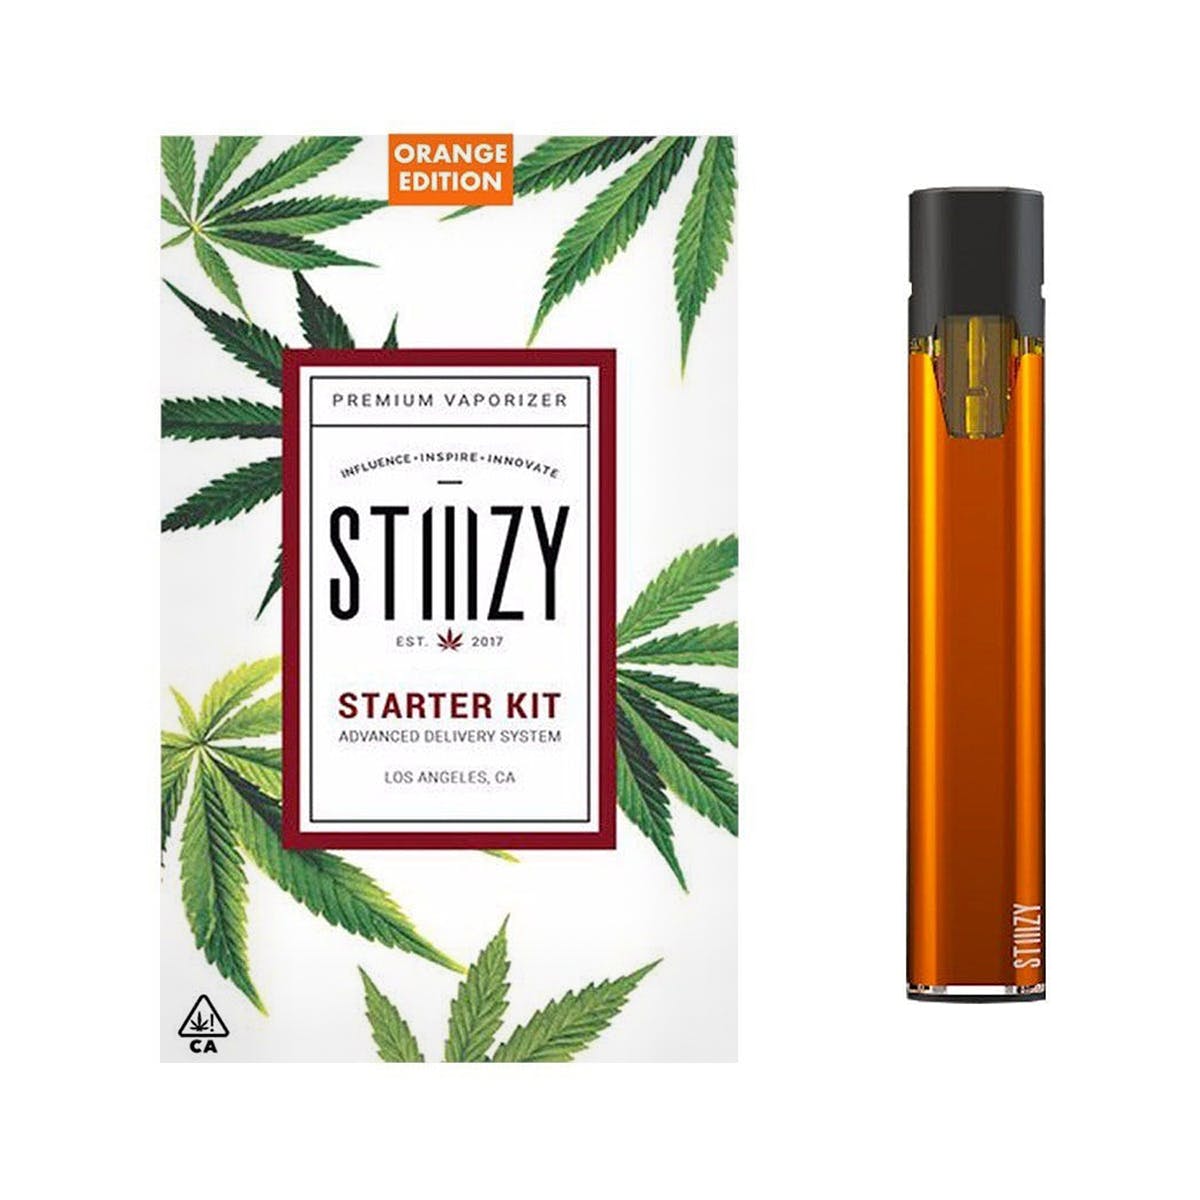 STIIIZY's Starter Kit - Orange